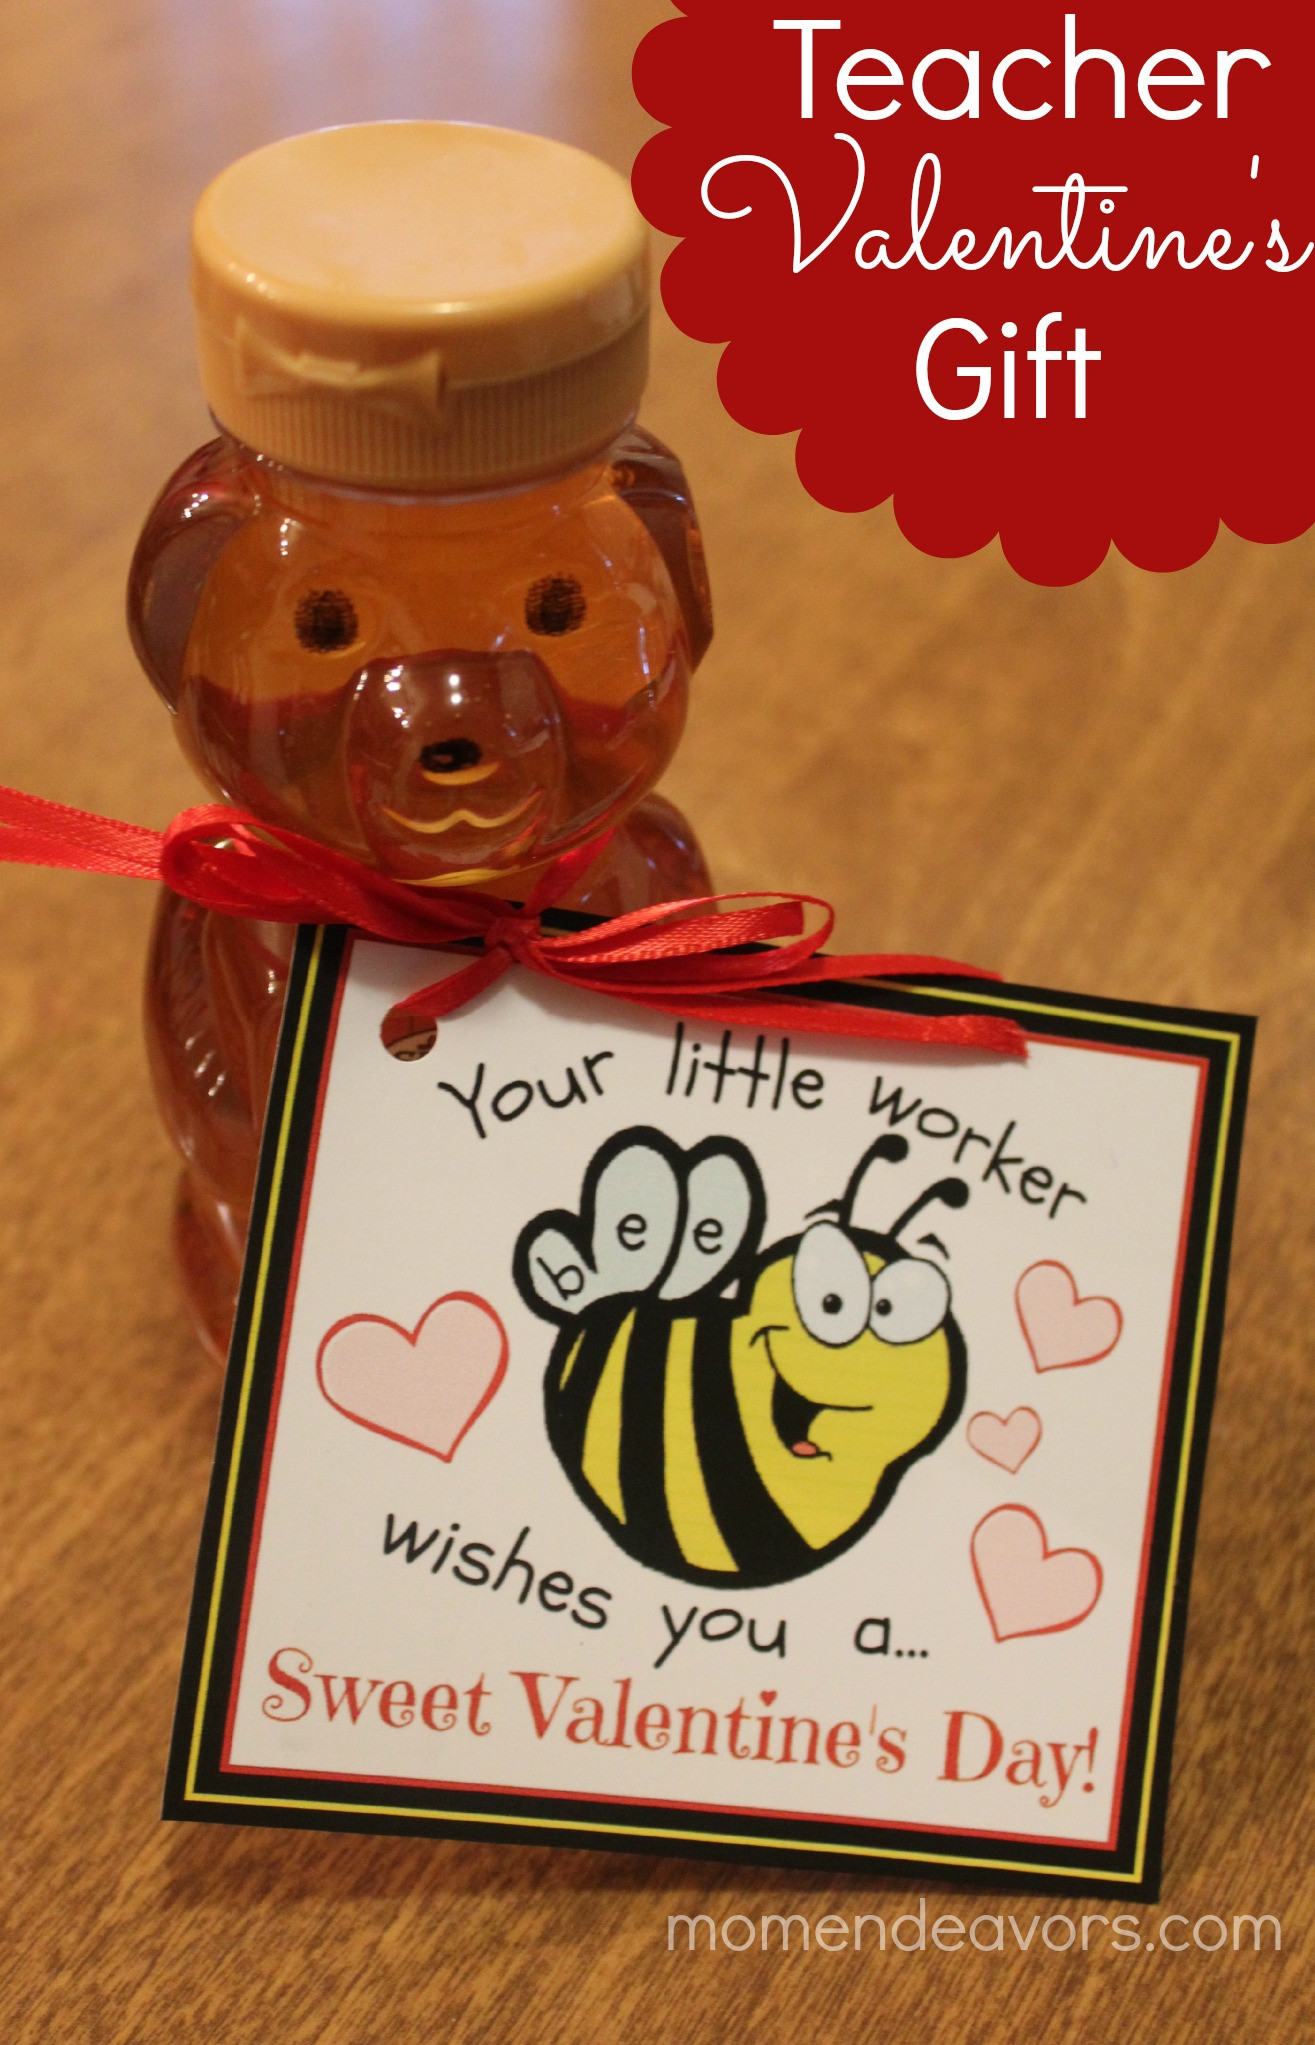 Valentines Day Gift Ideas Teachers
 Bee themed Teacher Valentine’s Gift